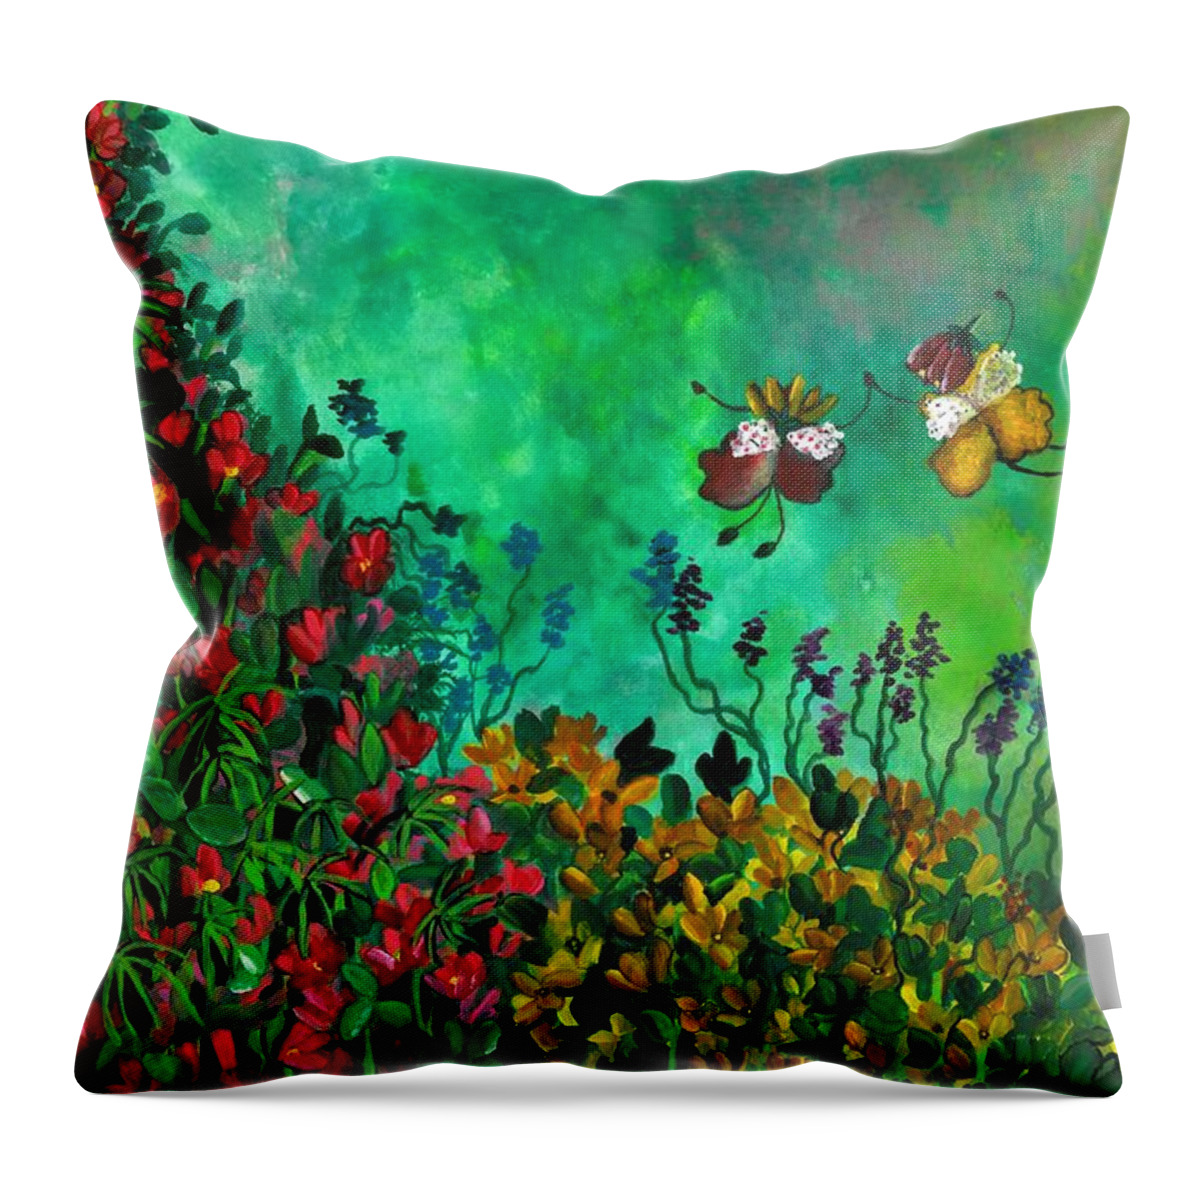 Fairy Throw Pillow featuring the painting Fairy garden by Tara Krishna